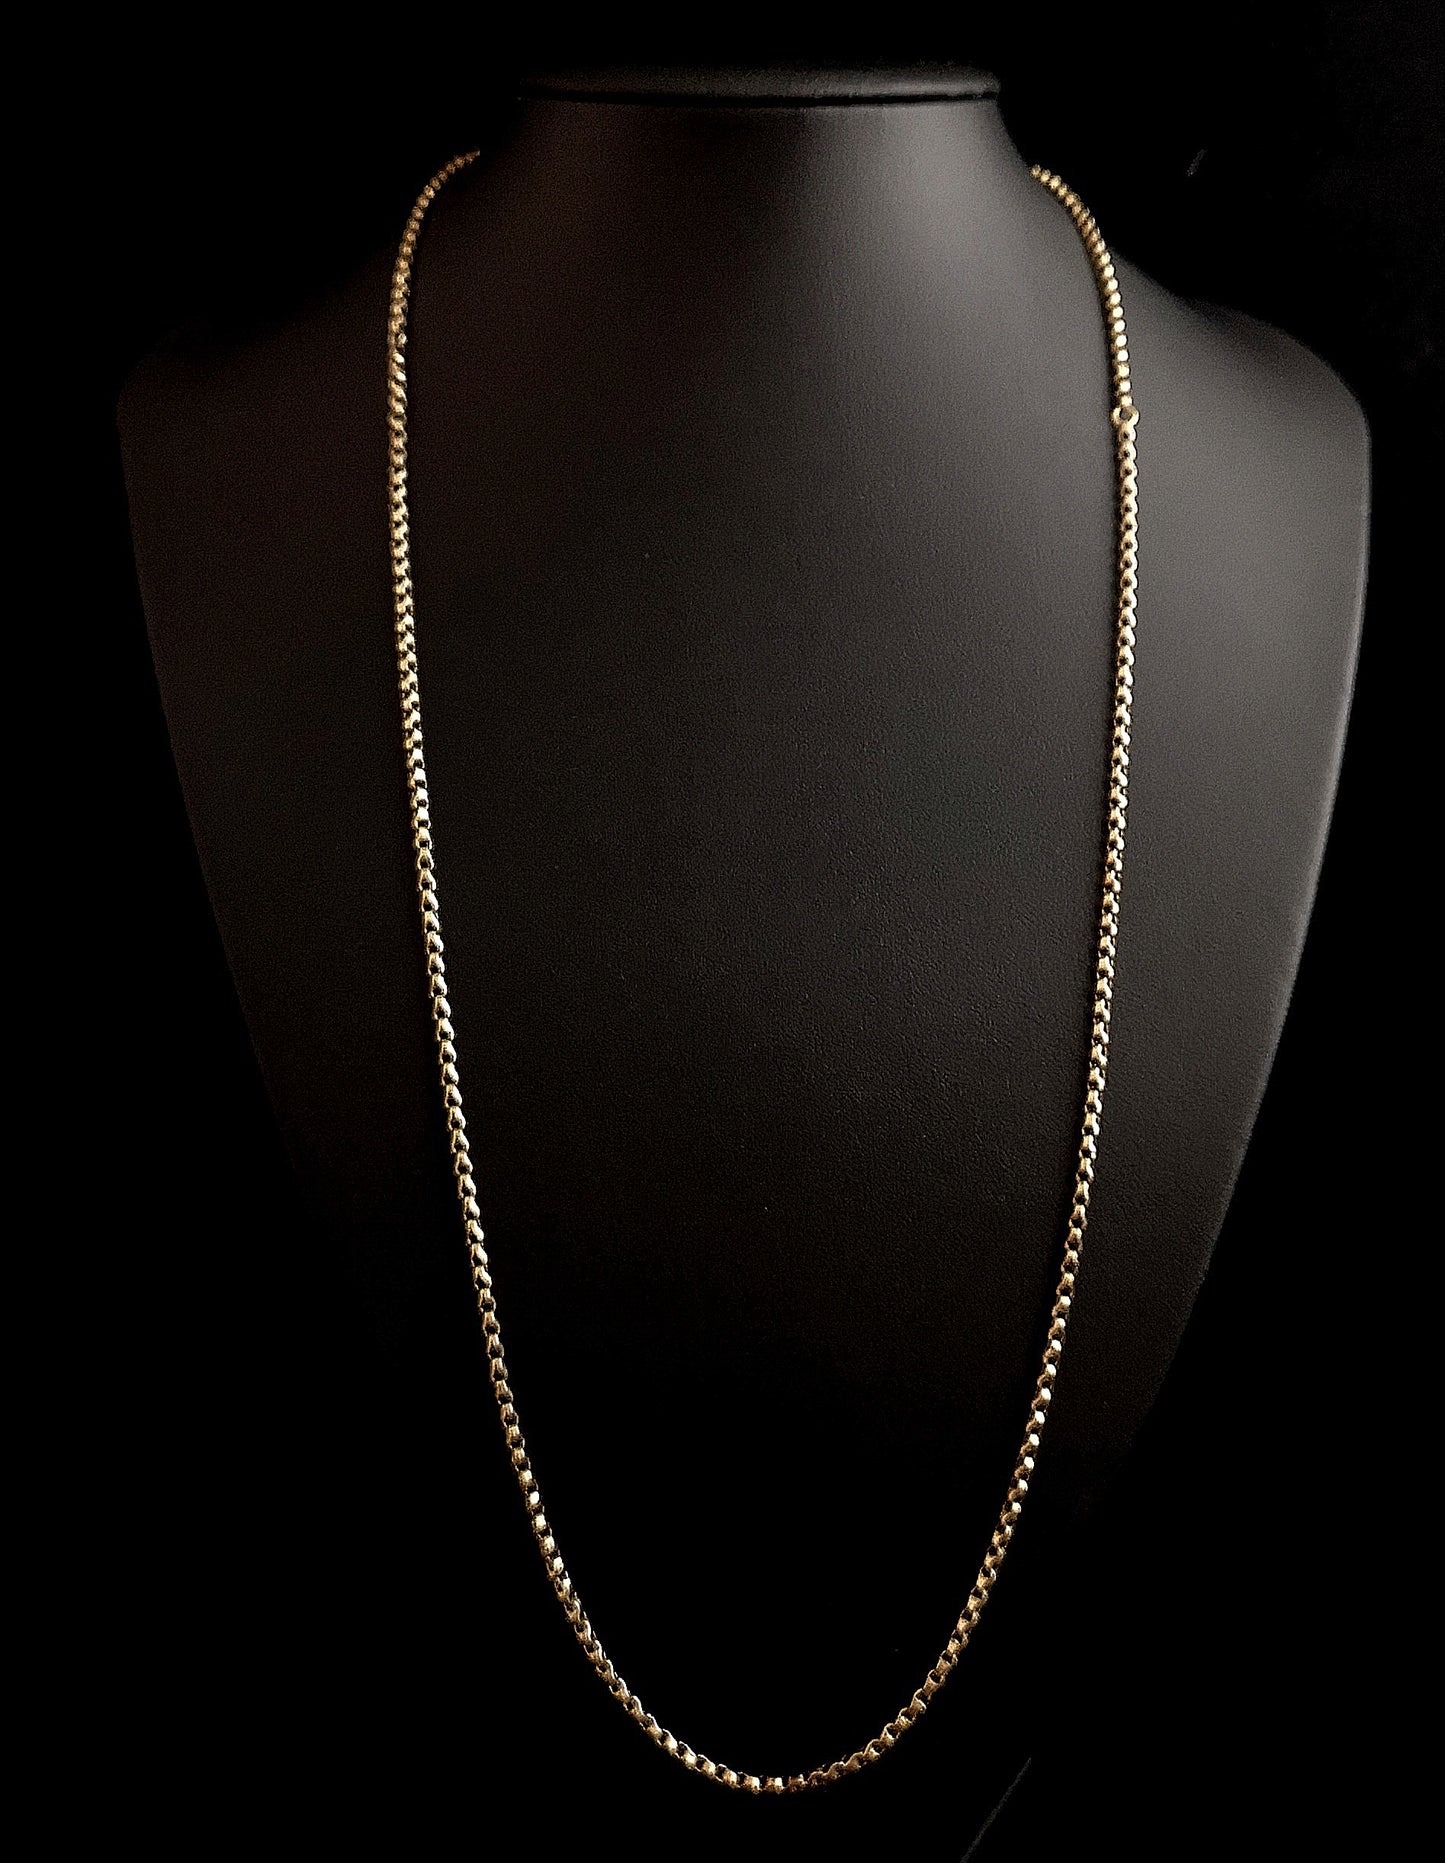 Antique Edwardian 9ct gold belcher chain necklace